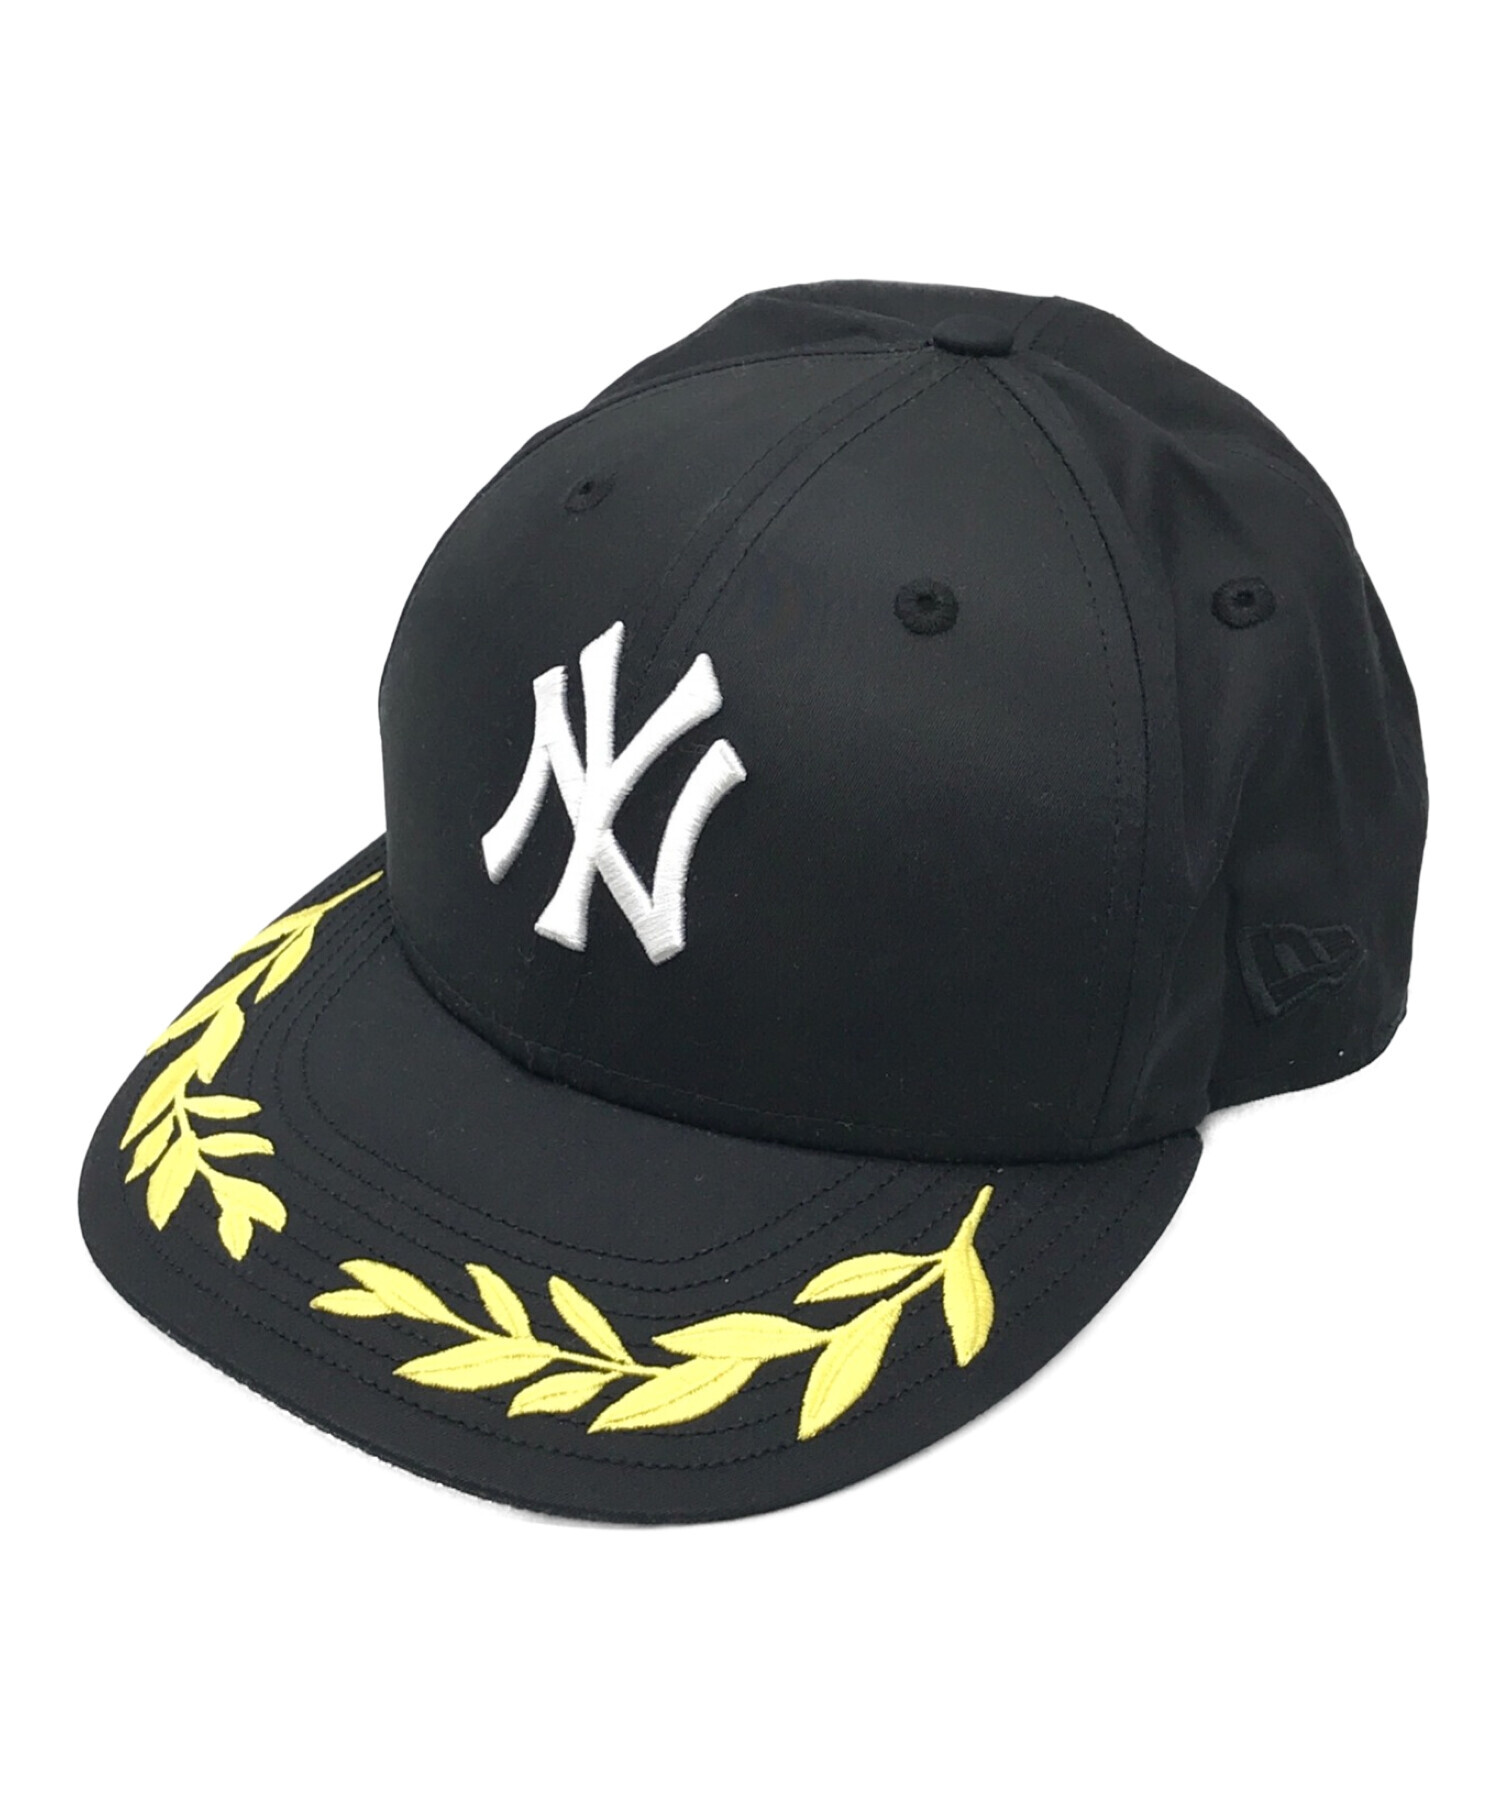 New Era (ニューエラ) KITH (キス) Yankees Laurel Low Profile サイズ:7 1/4